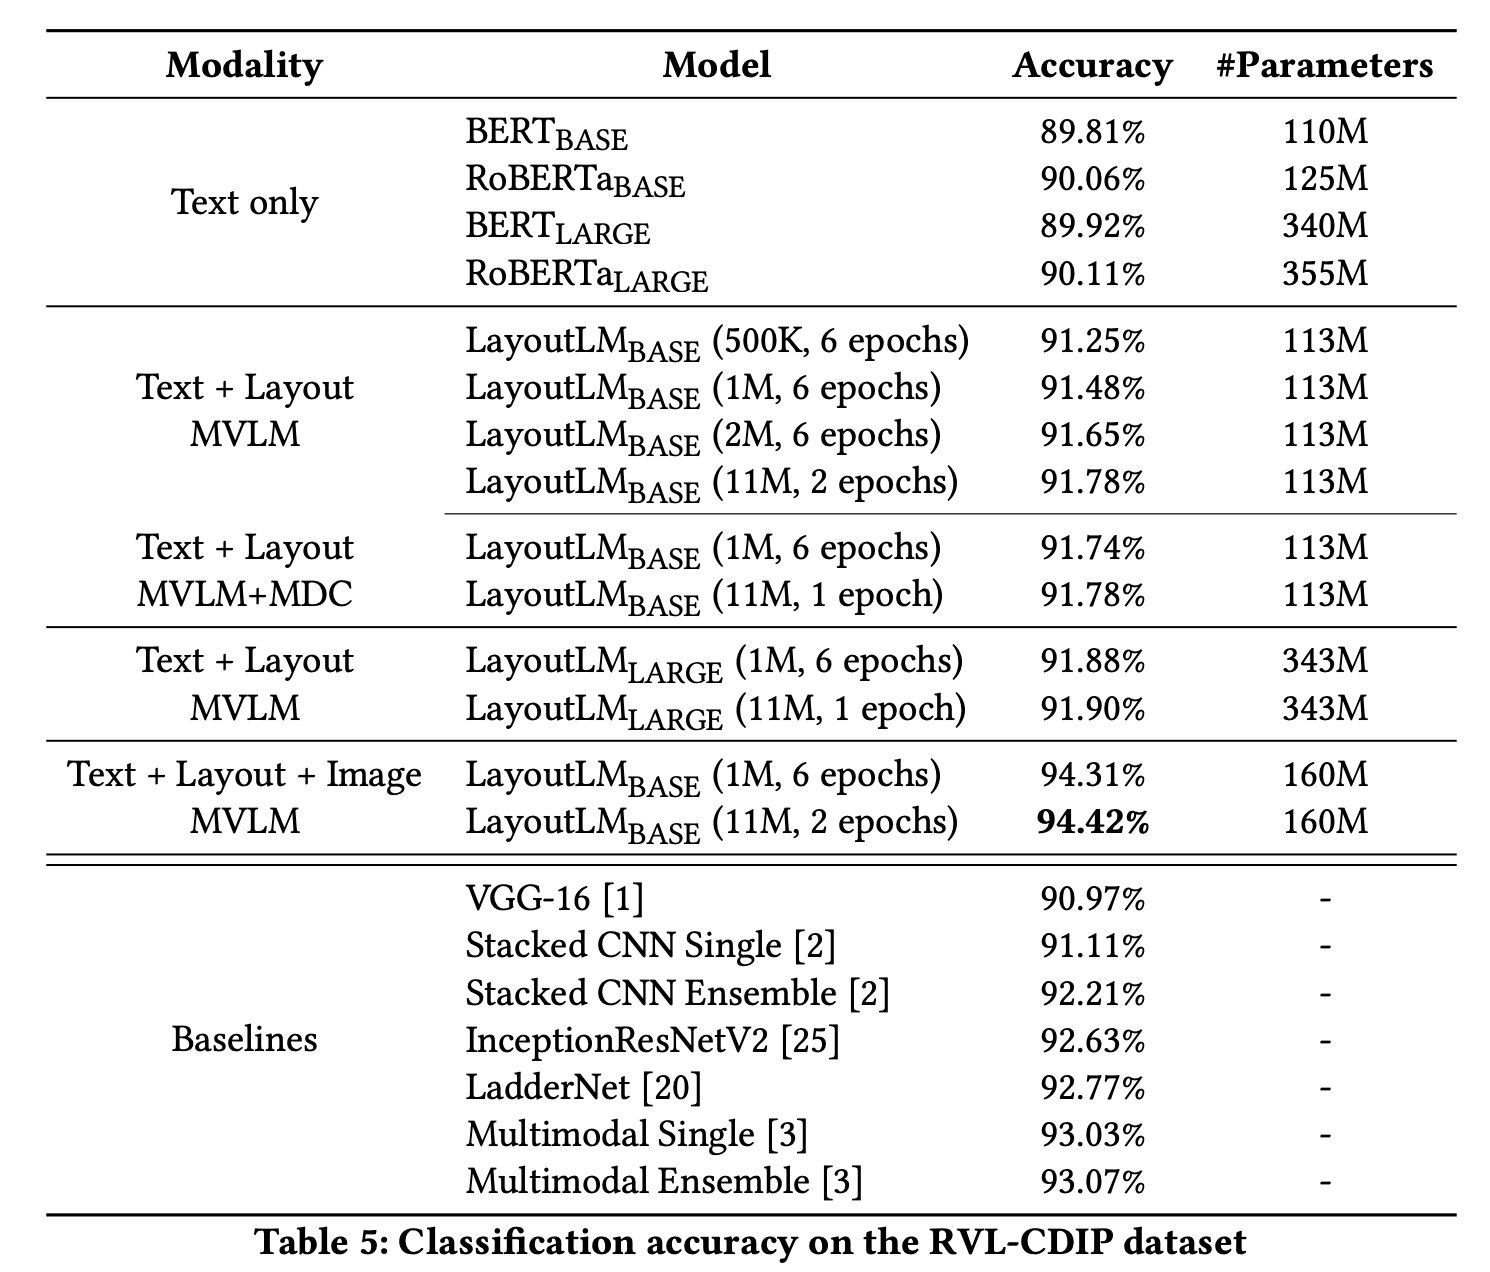 Model accuracy on RVL-CDIP